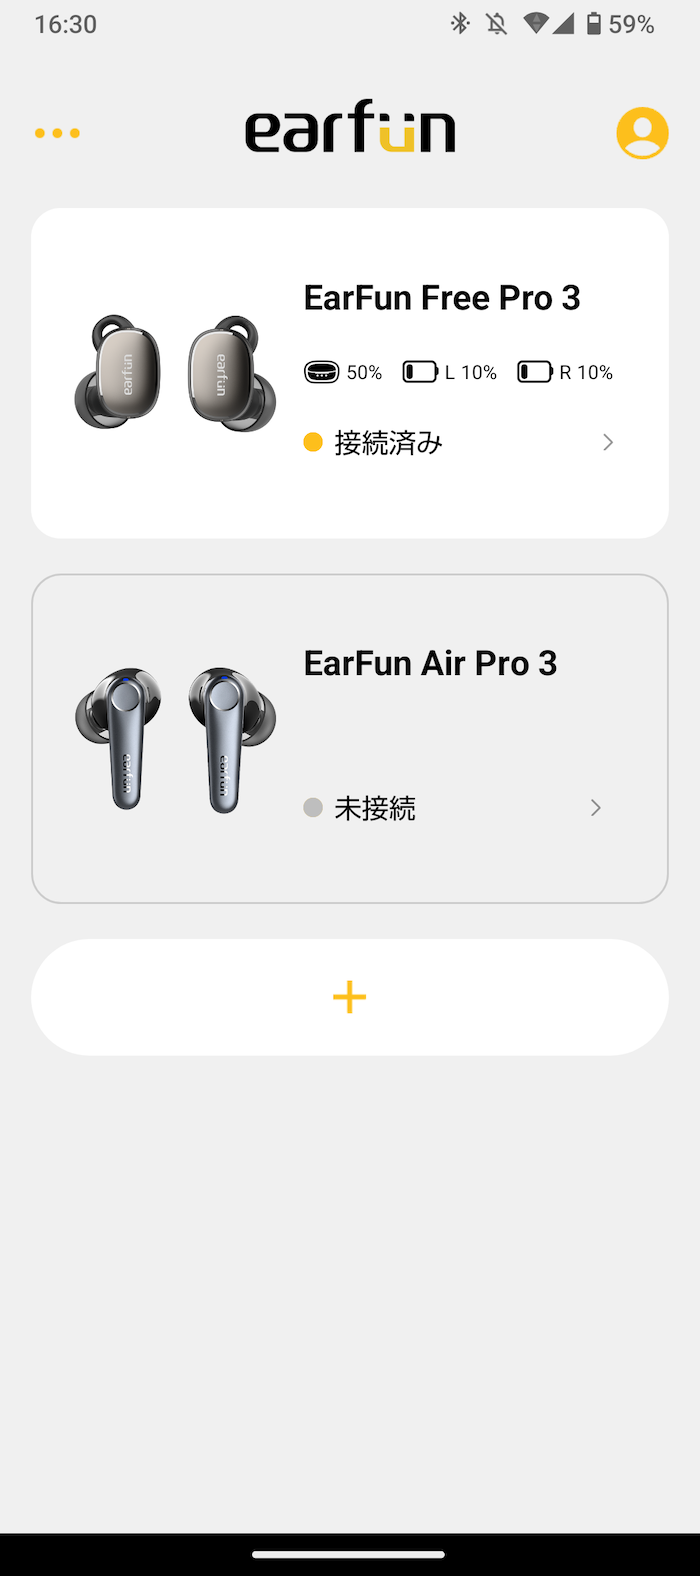 EarFun Free Pro 3のイヤホン充電速度